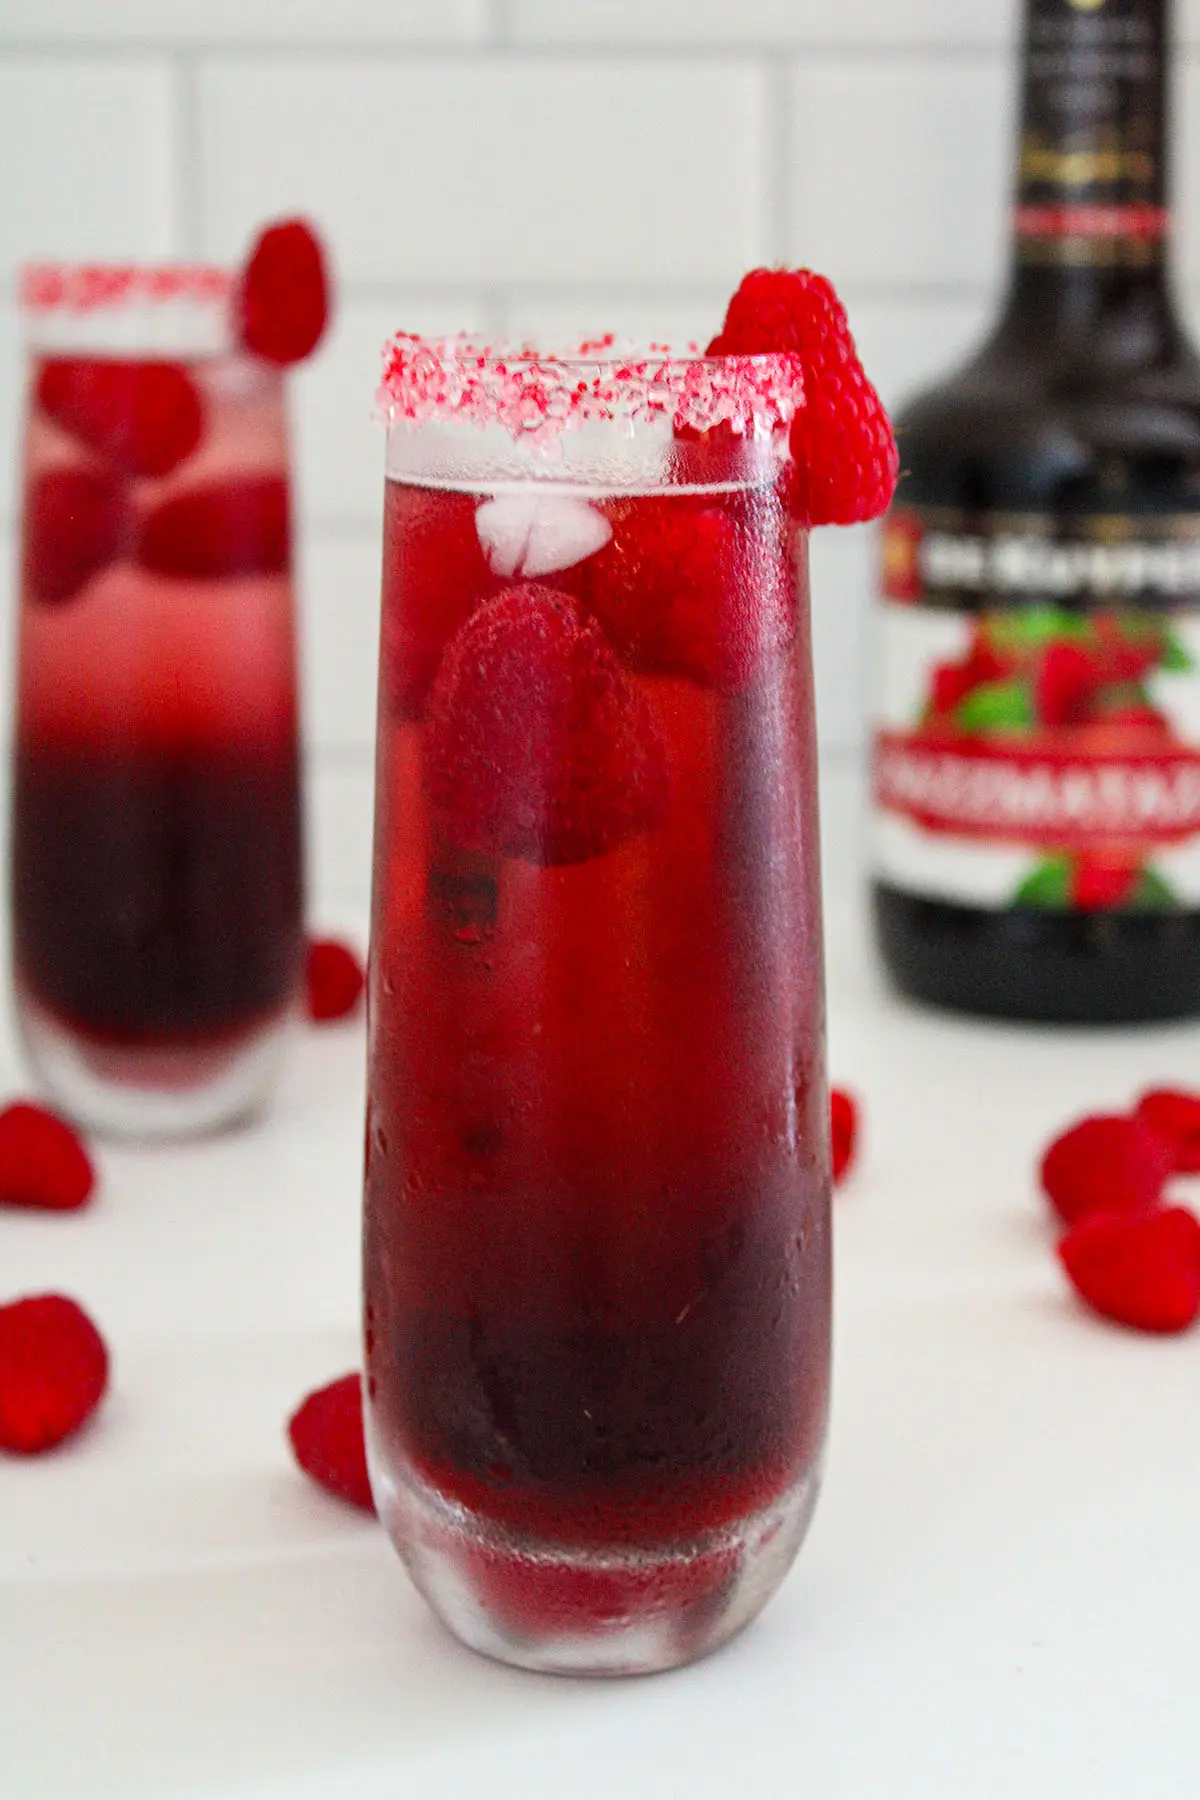 homemade raspberry mimosa recipe for Valentine's day